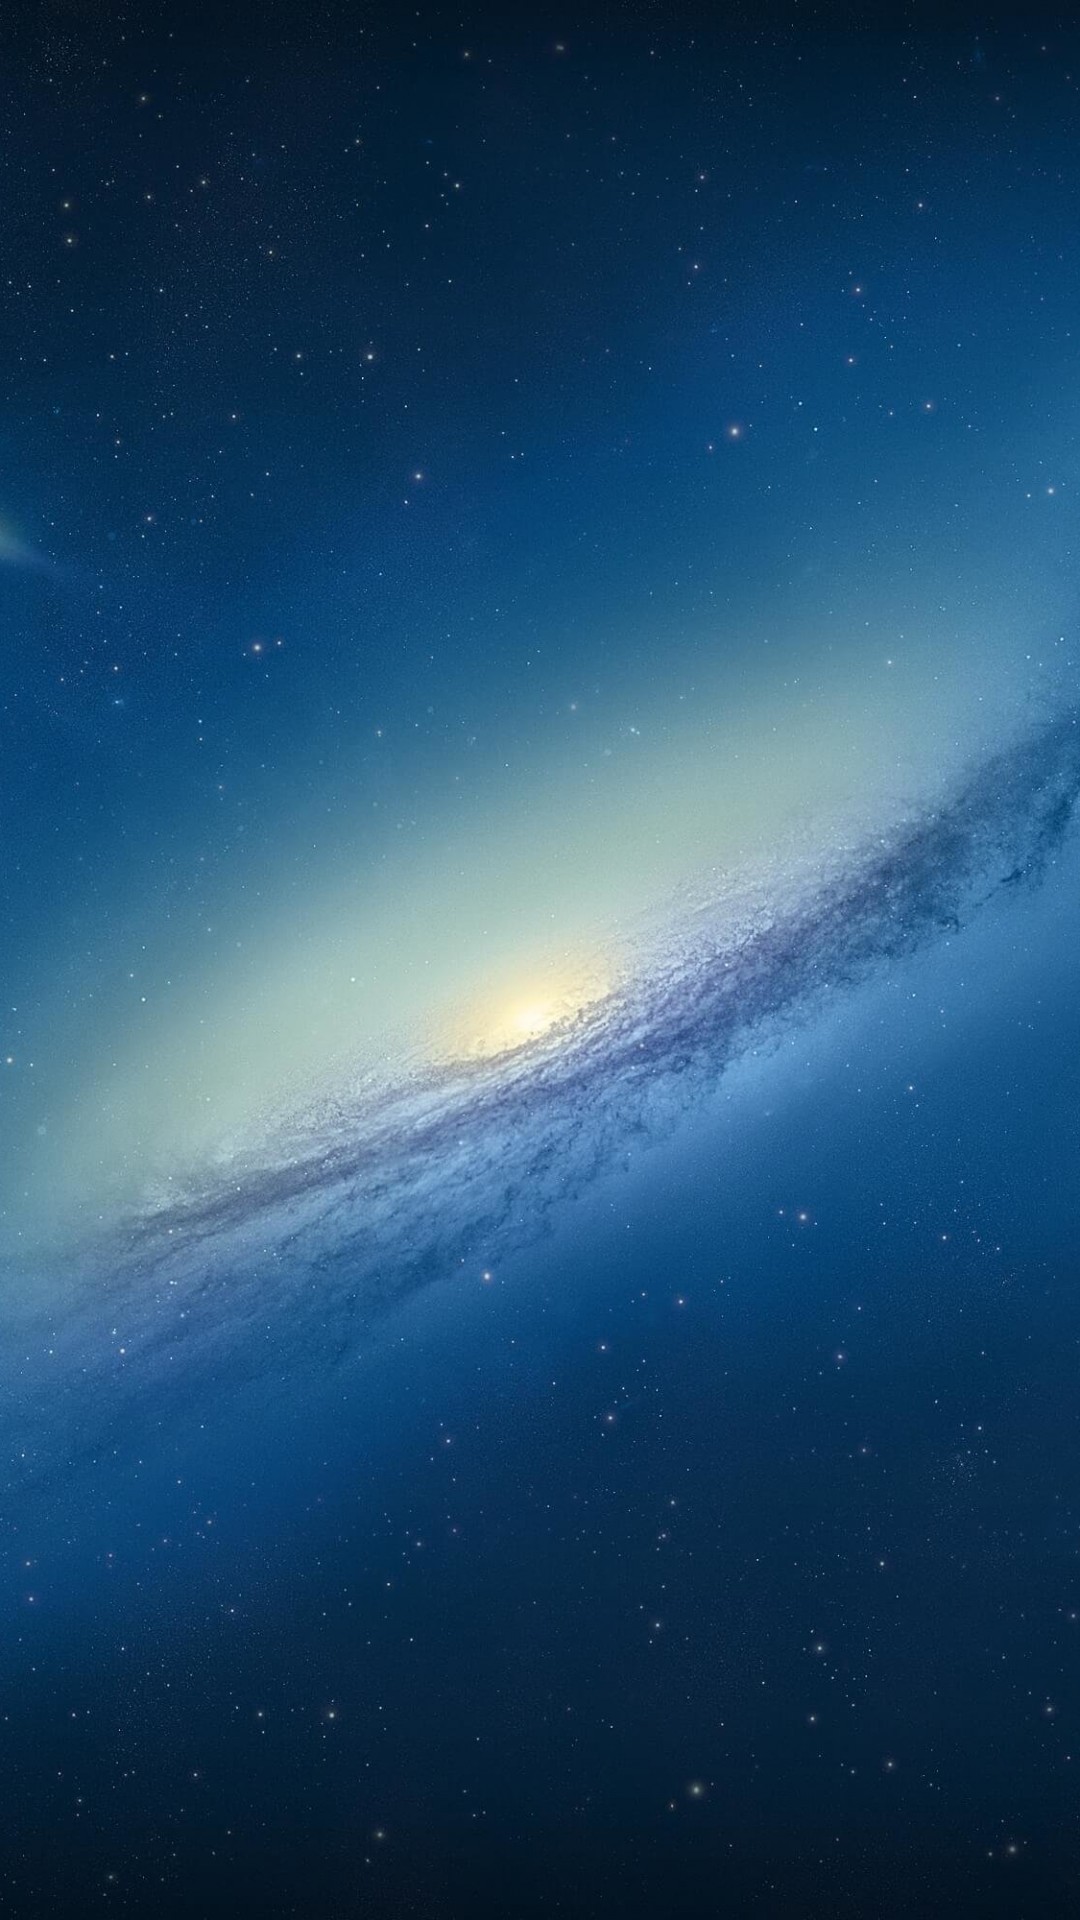 Galaxy NGC 3190 Wallpaper for Google Nexus 5